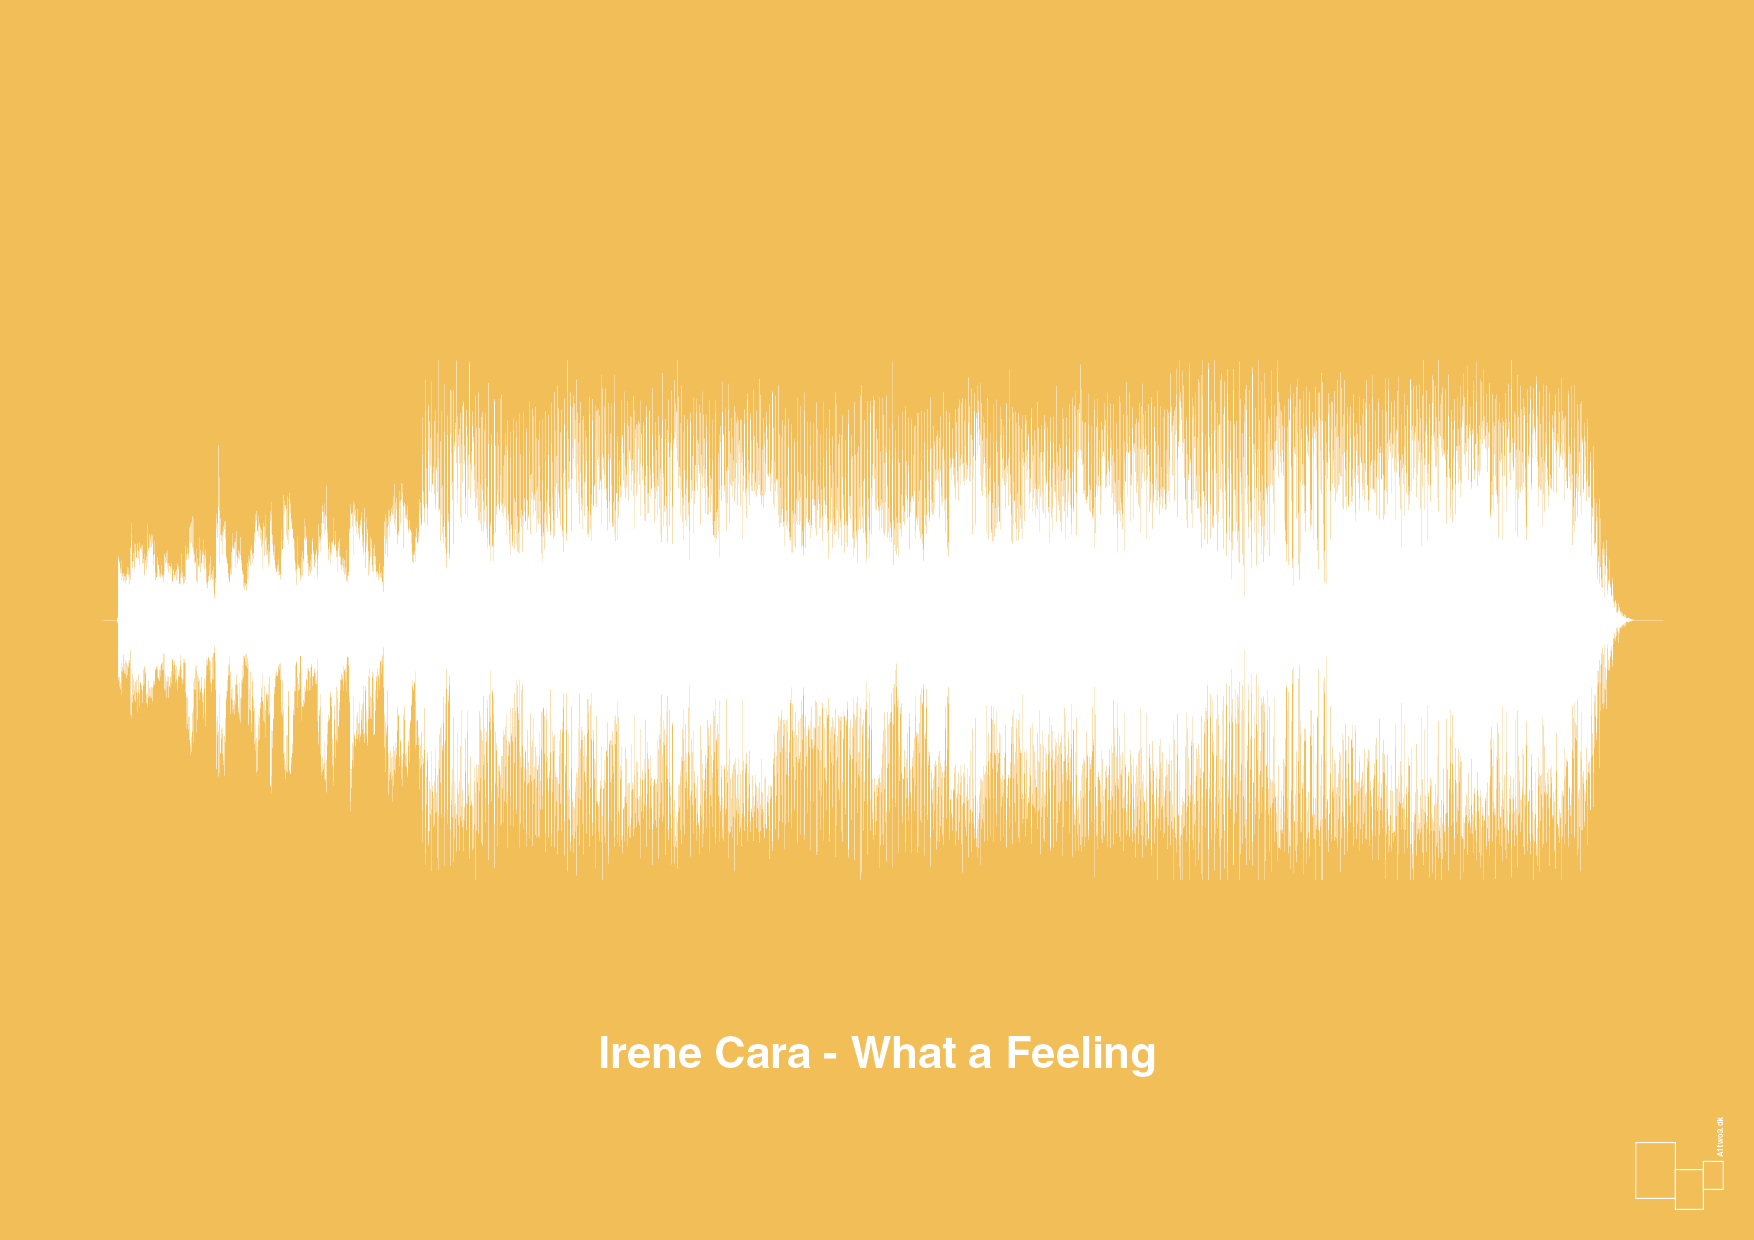 irene cara - what a feeling - Plakat med Musik i Honeycomb